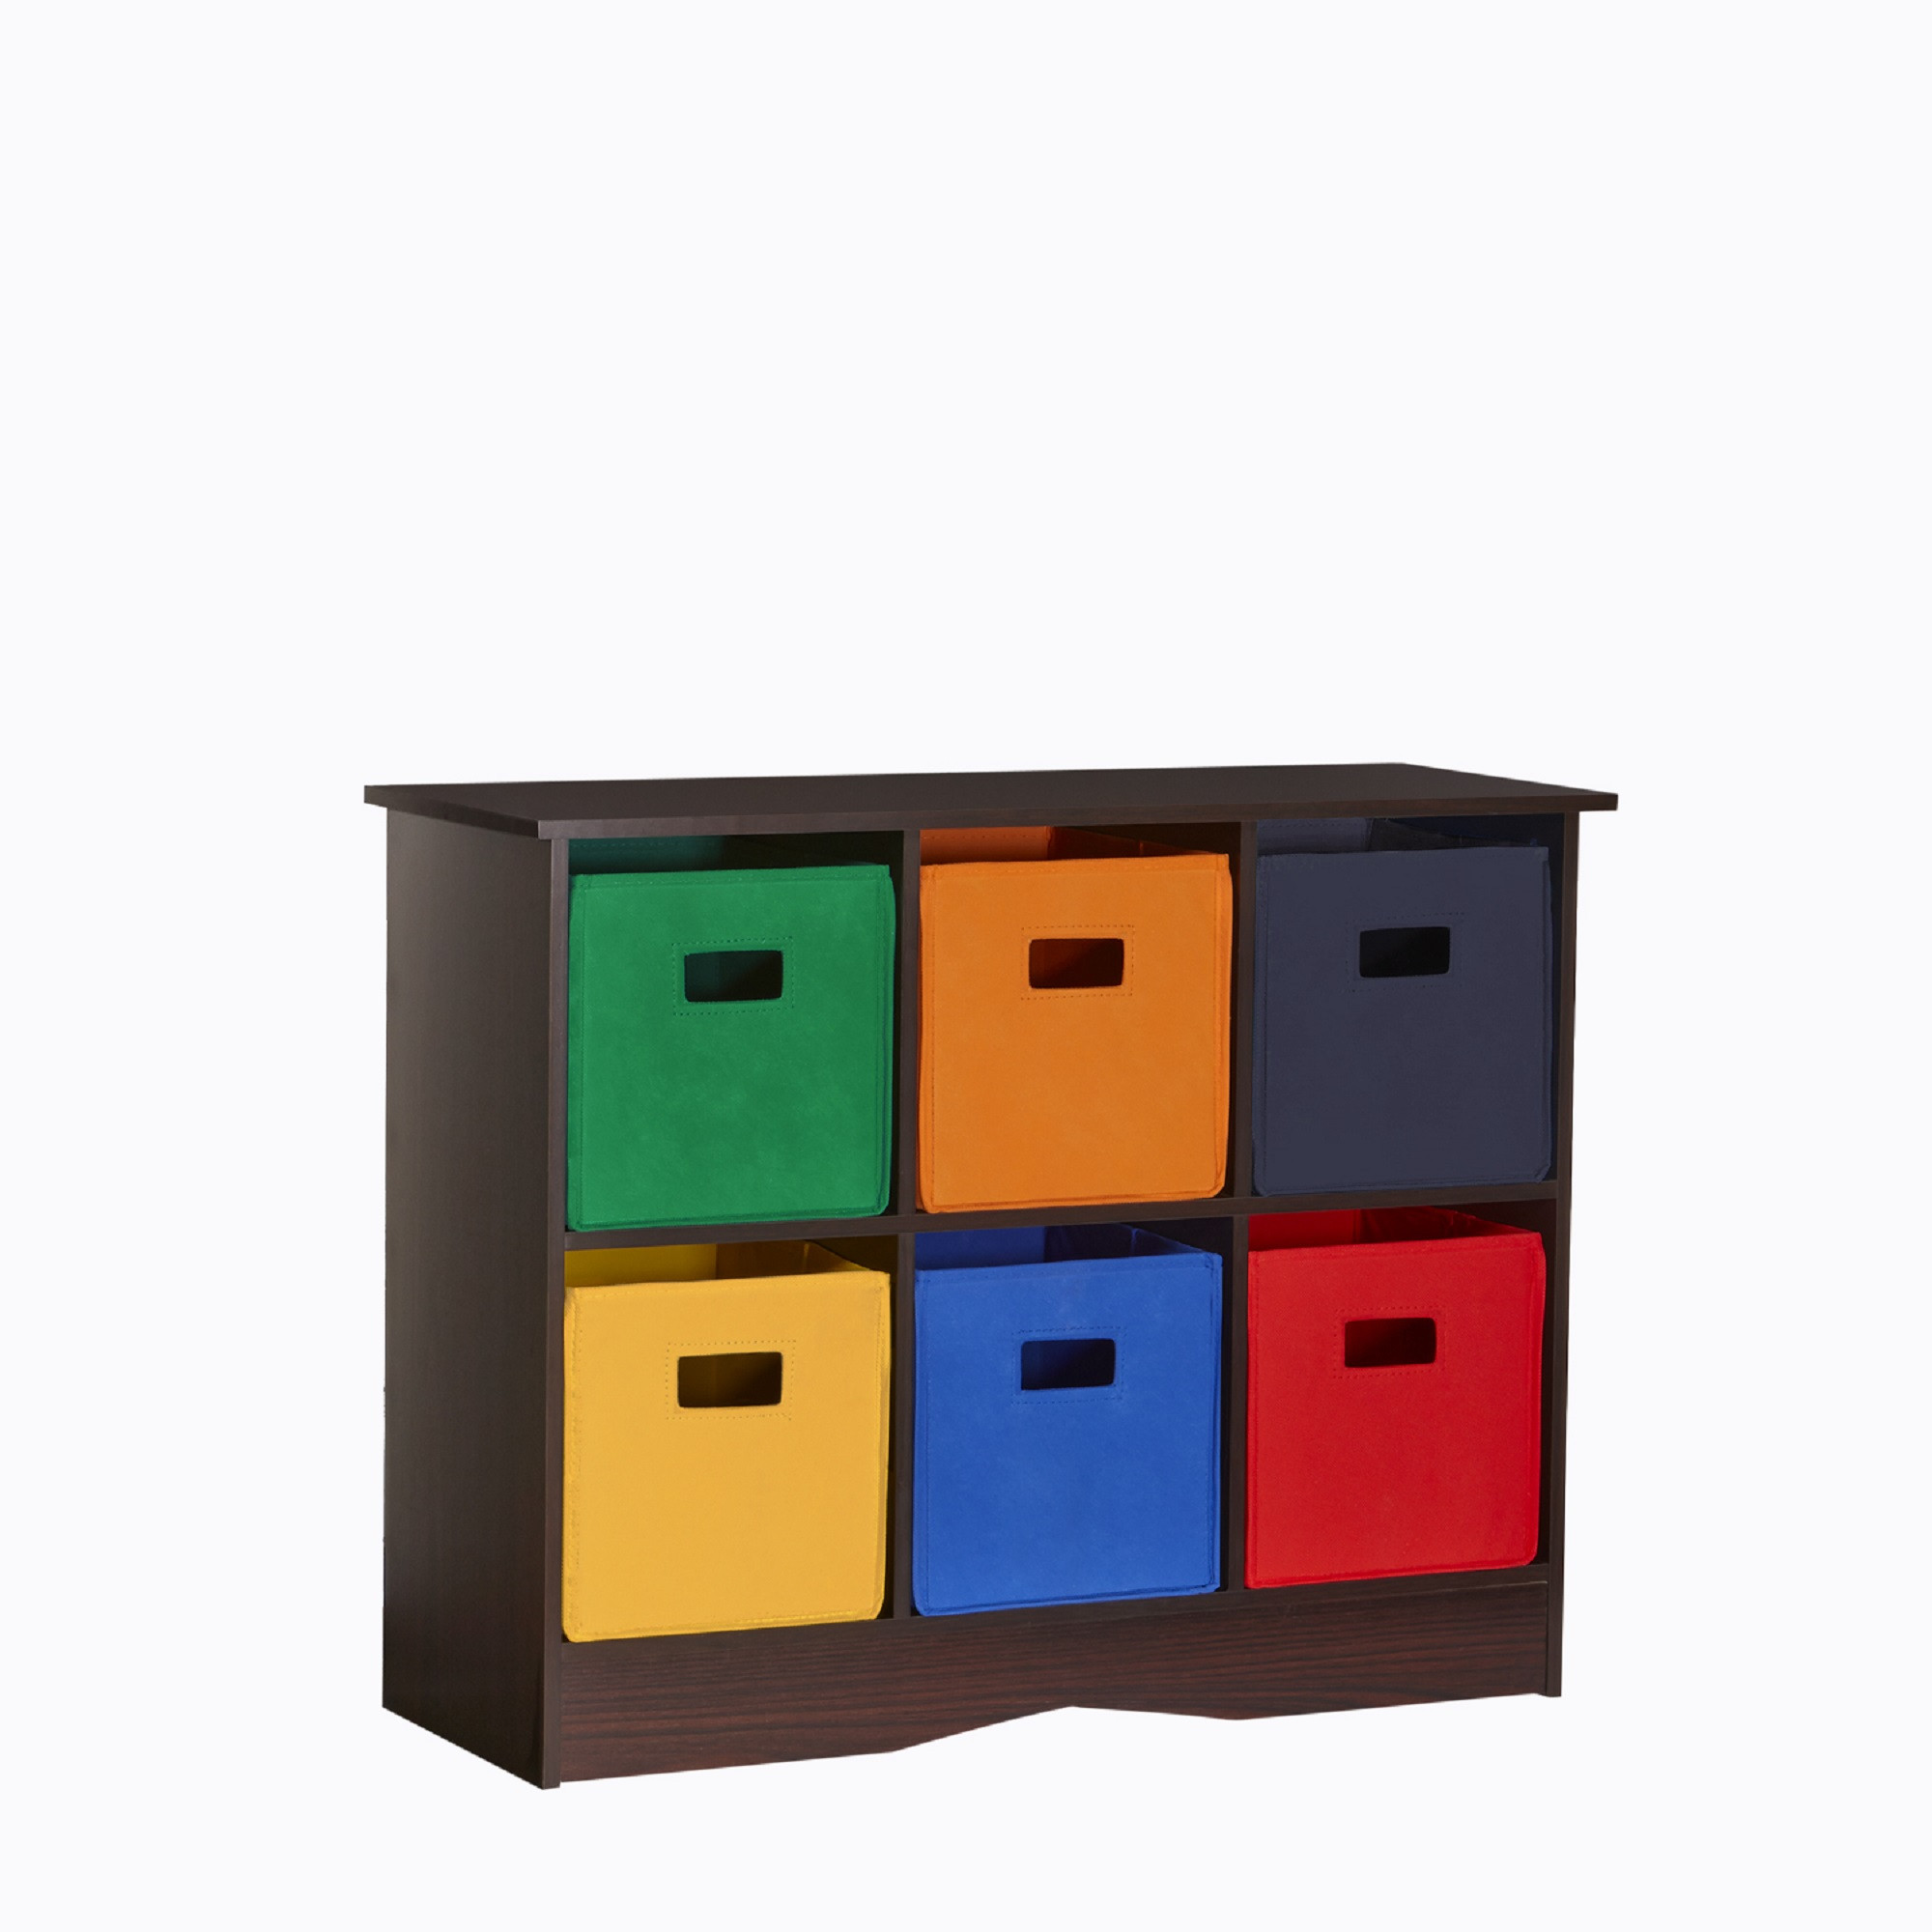 Storage Bins For Kids Room
 RiverRidge Kids 6 Bin Storage Cabinet Espresso Primary